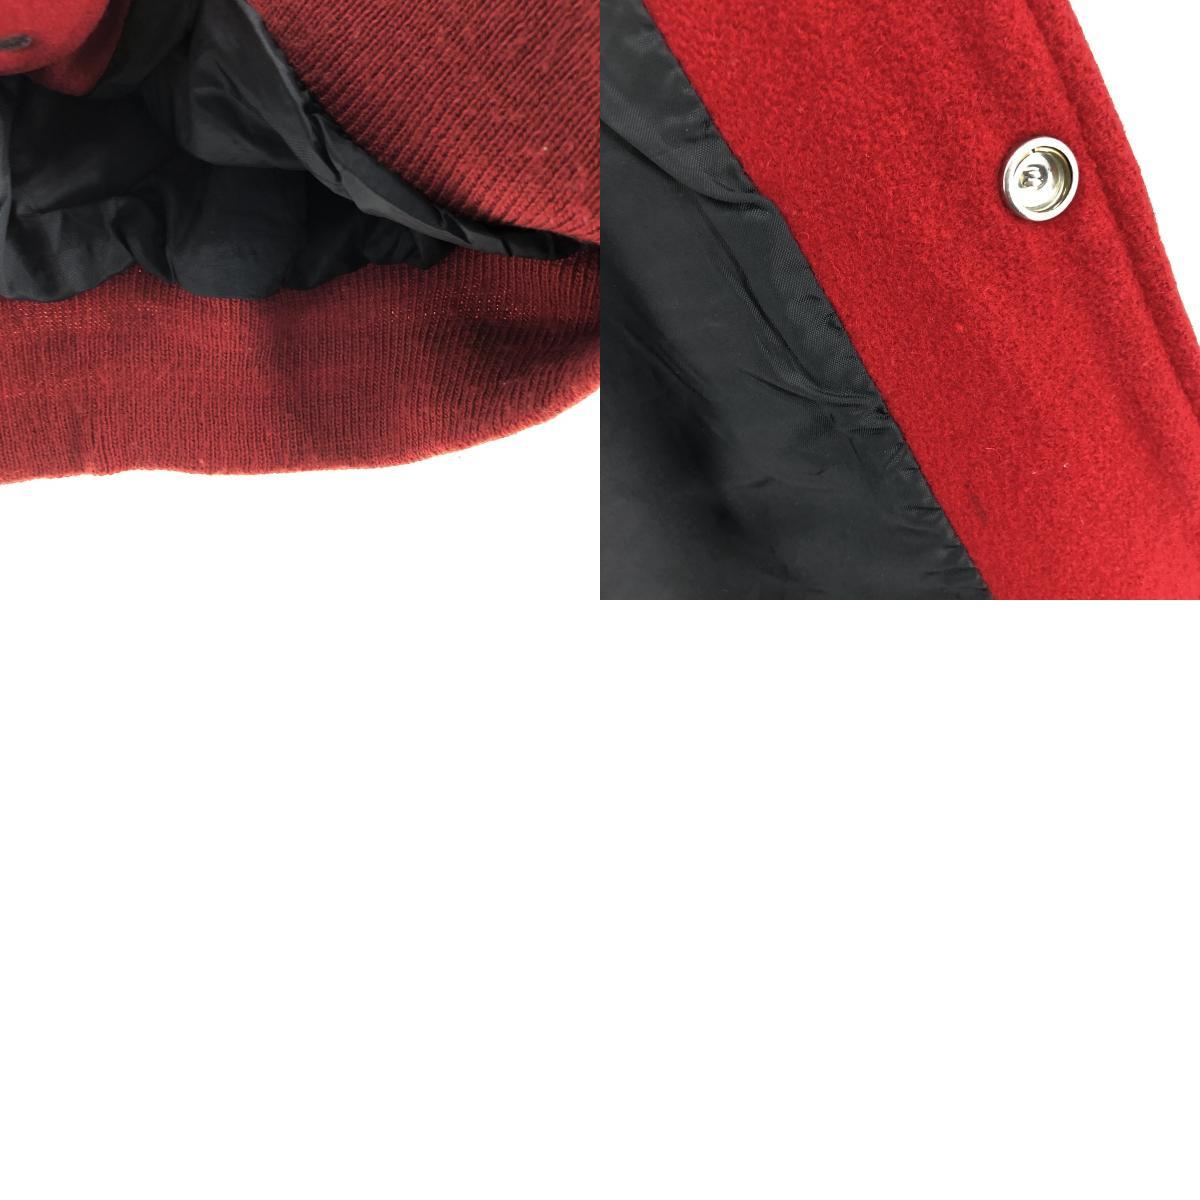  б/у одежда 80 годы BUTWIN рукав кожа шерсть куртка Award жакет балка City жакет USA производства мужской M Vintage /eaa405725